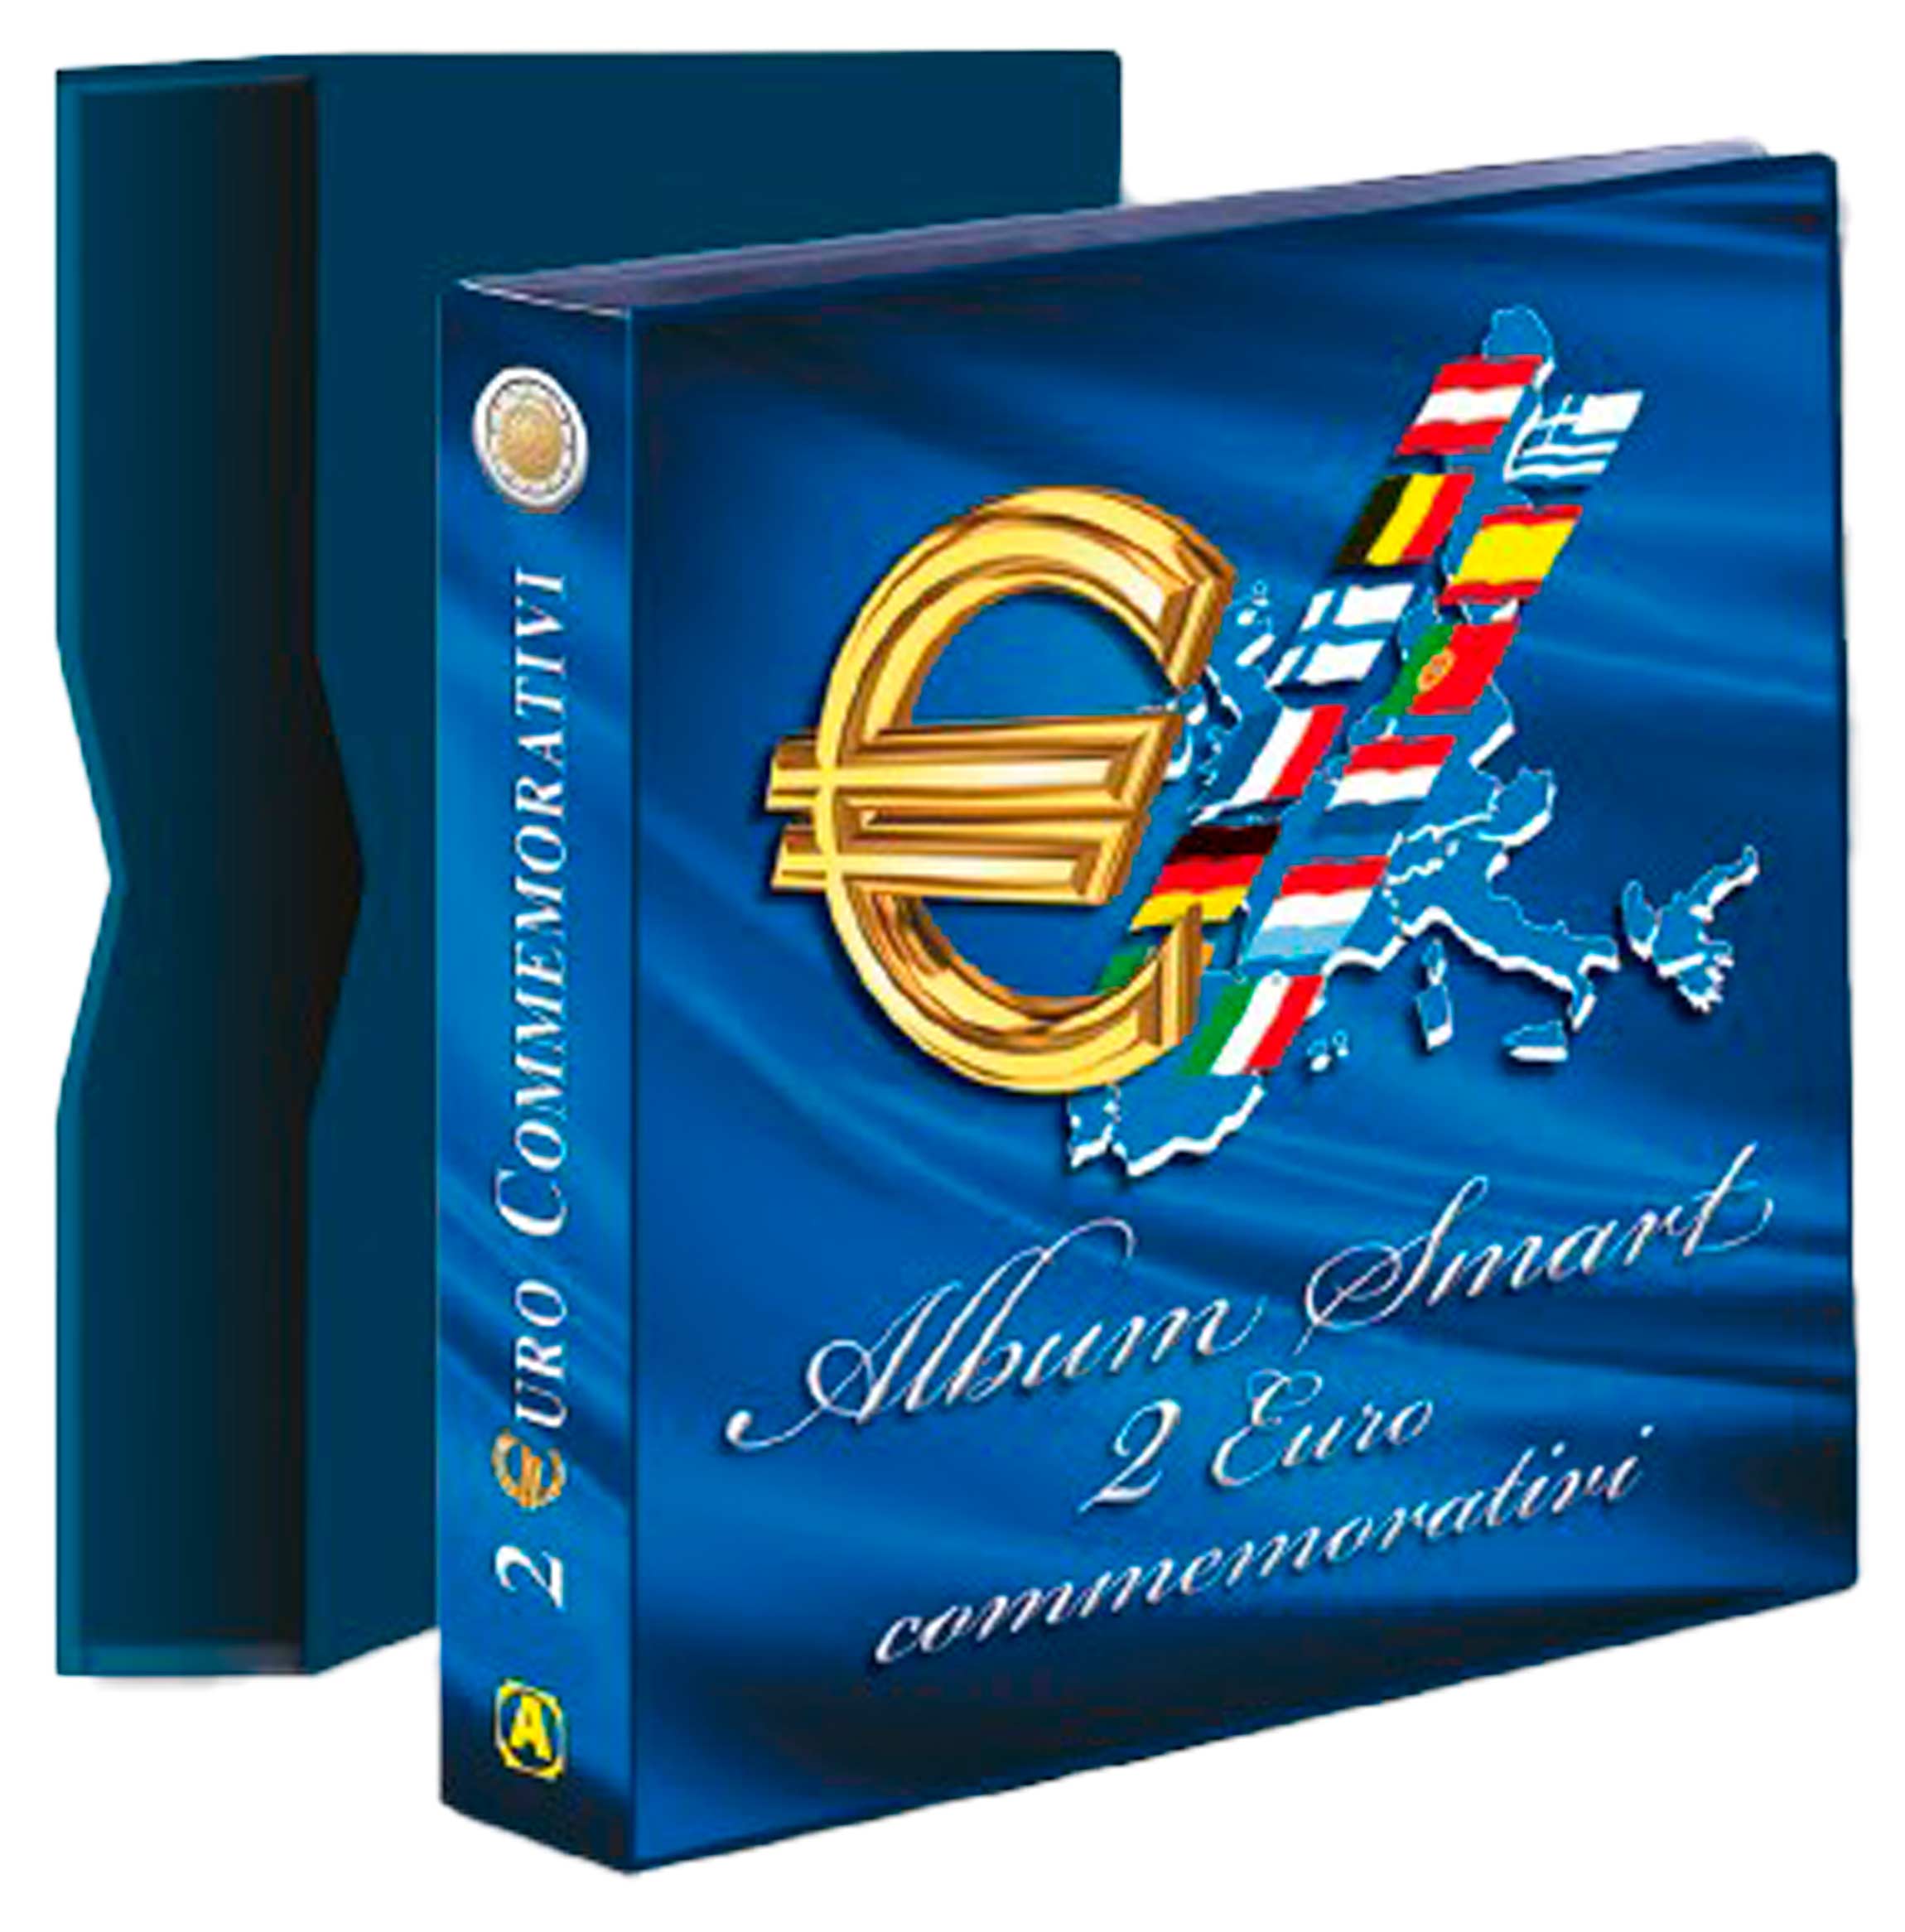 Album Vuoto 2 Euro Commemorativi Smart Abafil